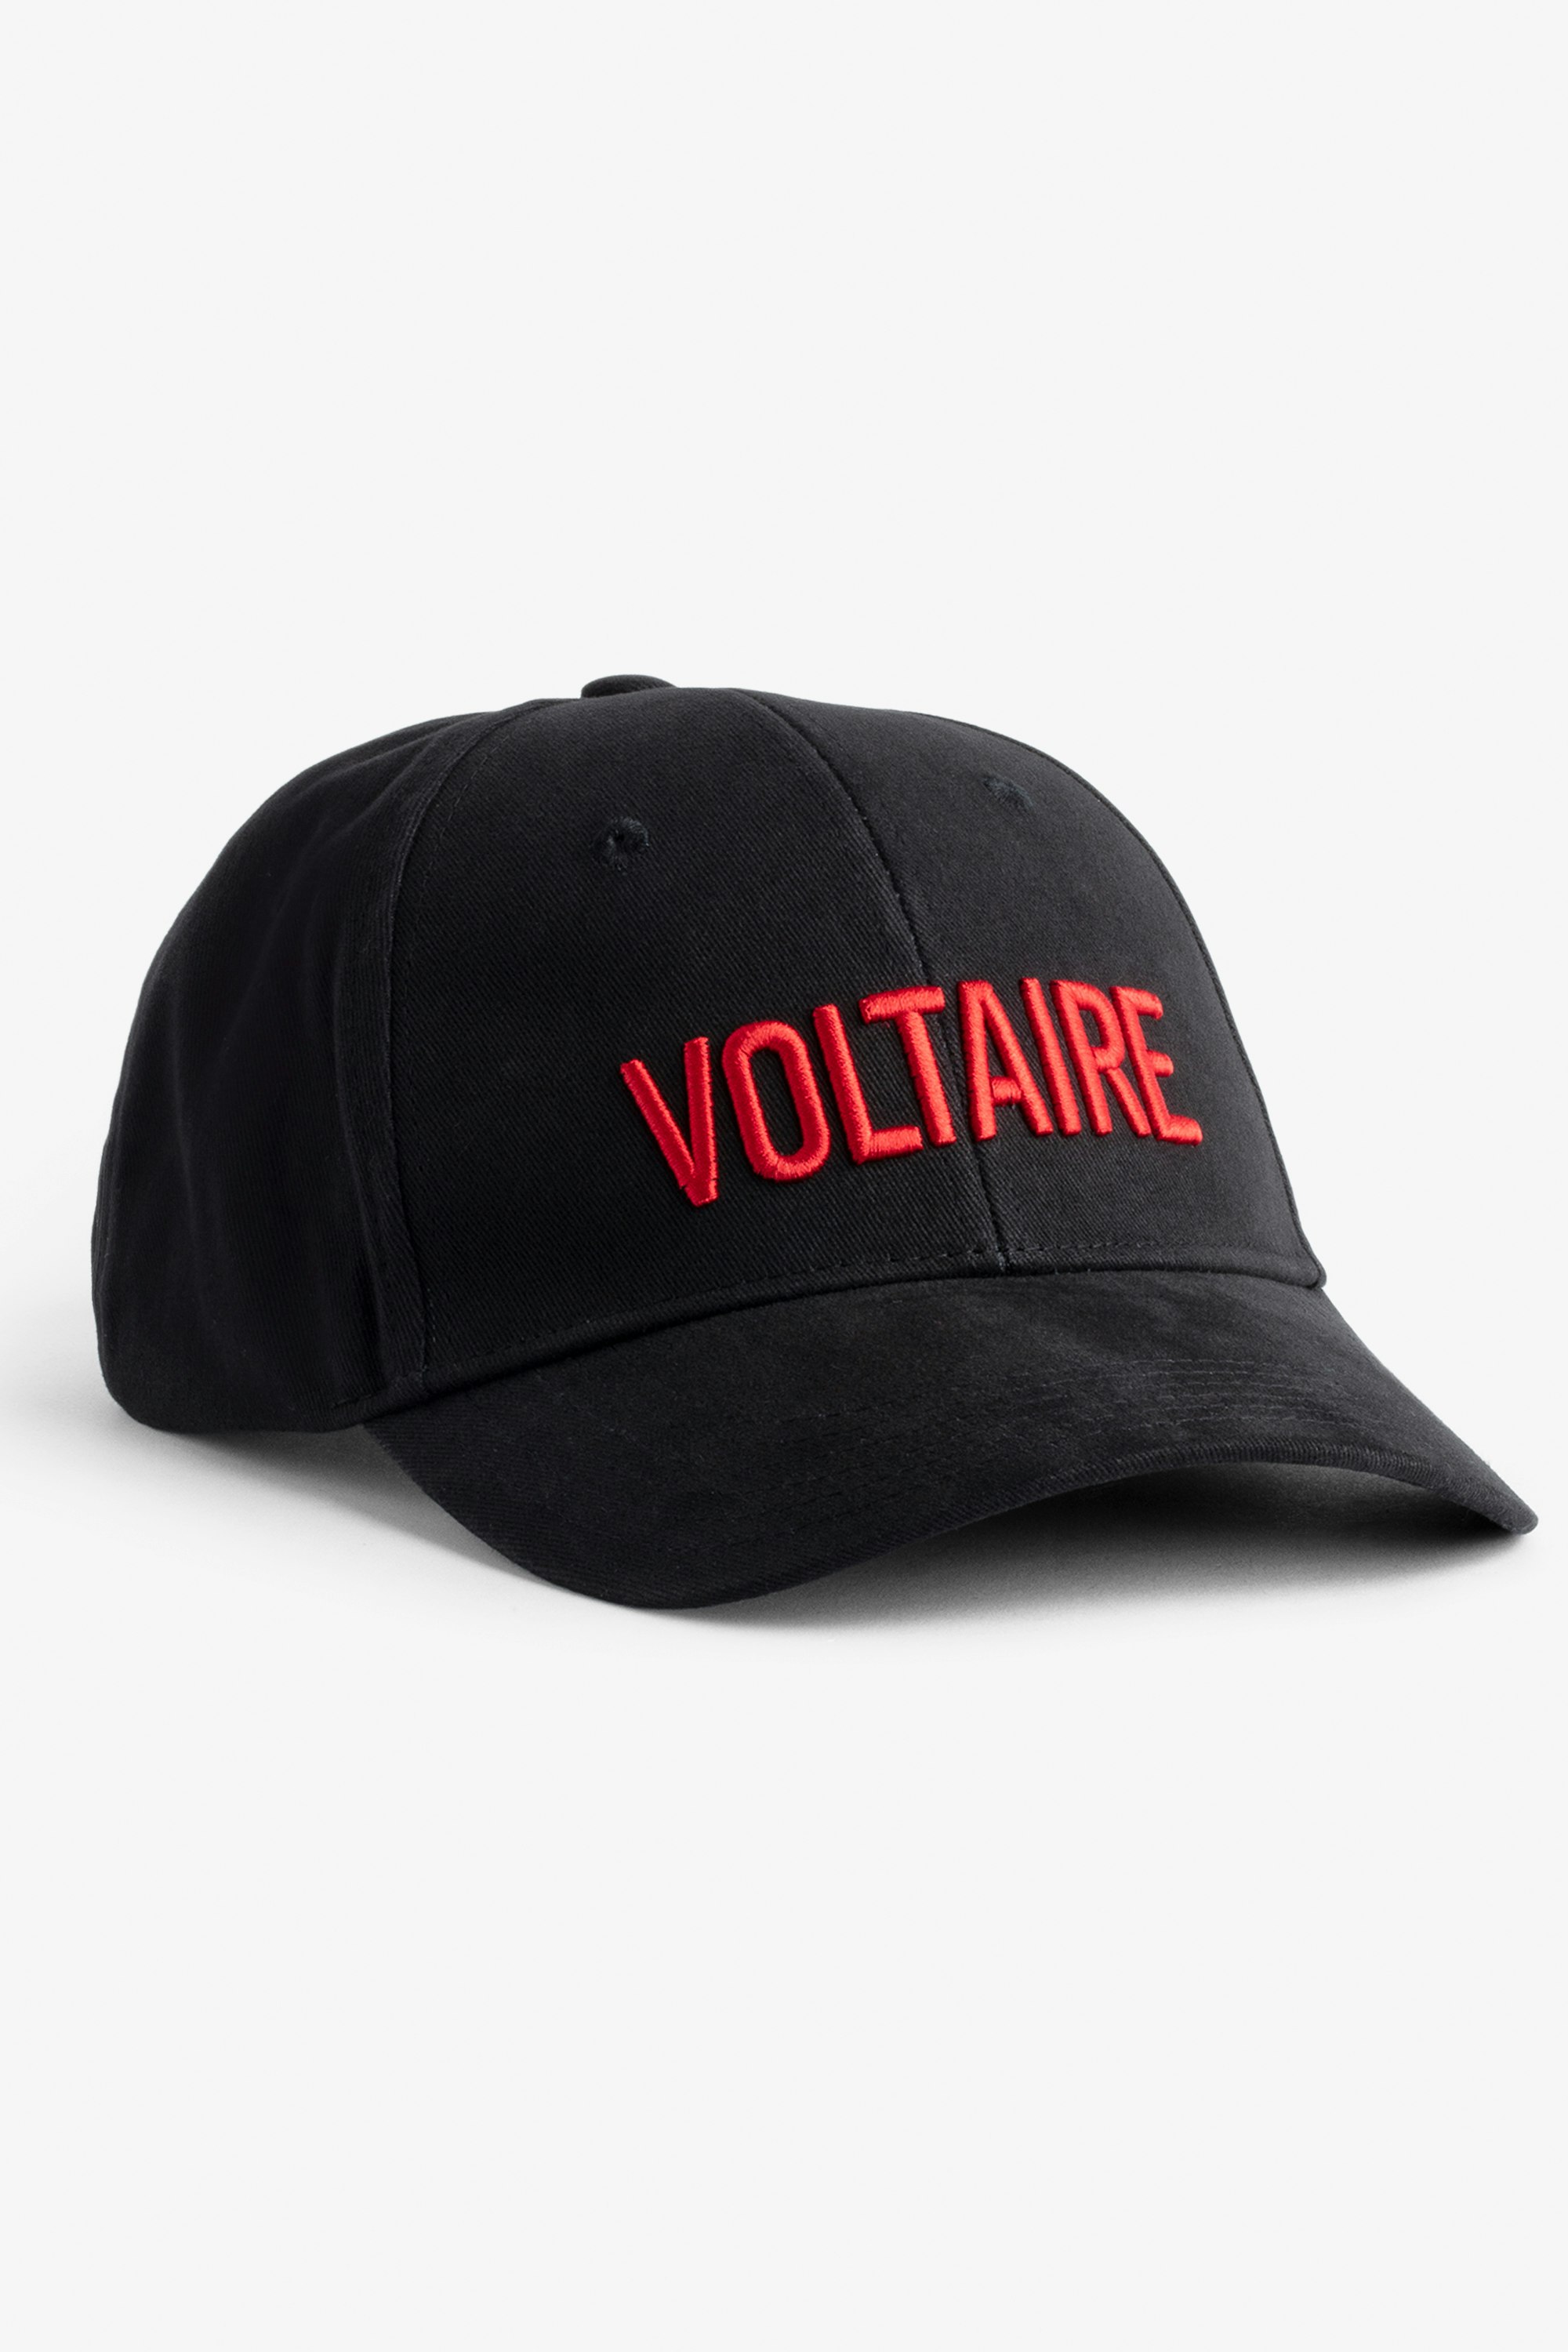 Gorra Klelia Voltaire Gorra negra de algodón para mujer con bordado «Voltaire»